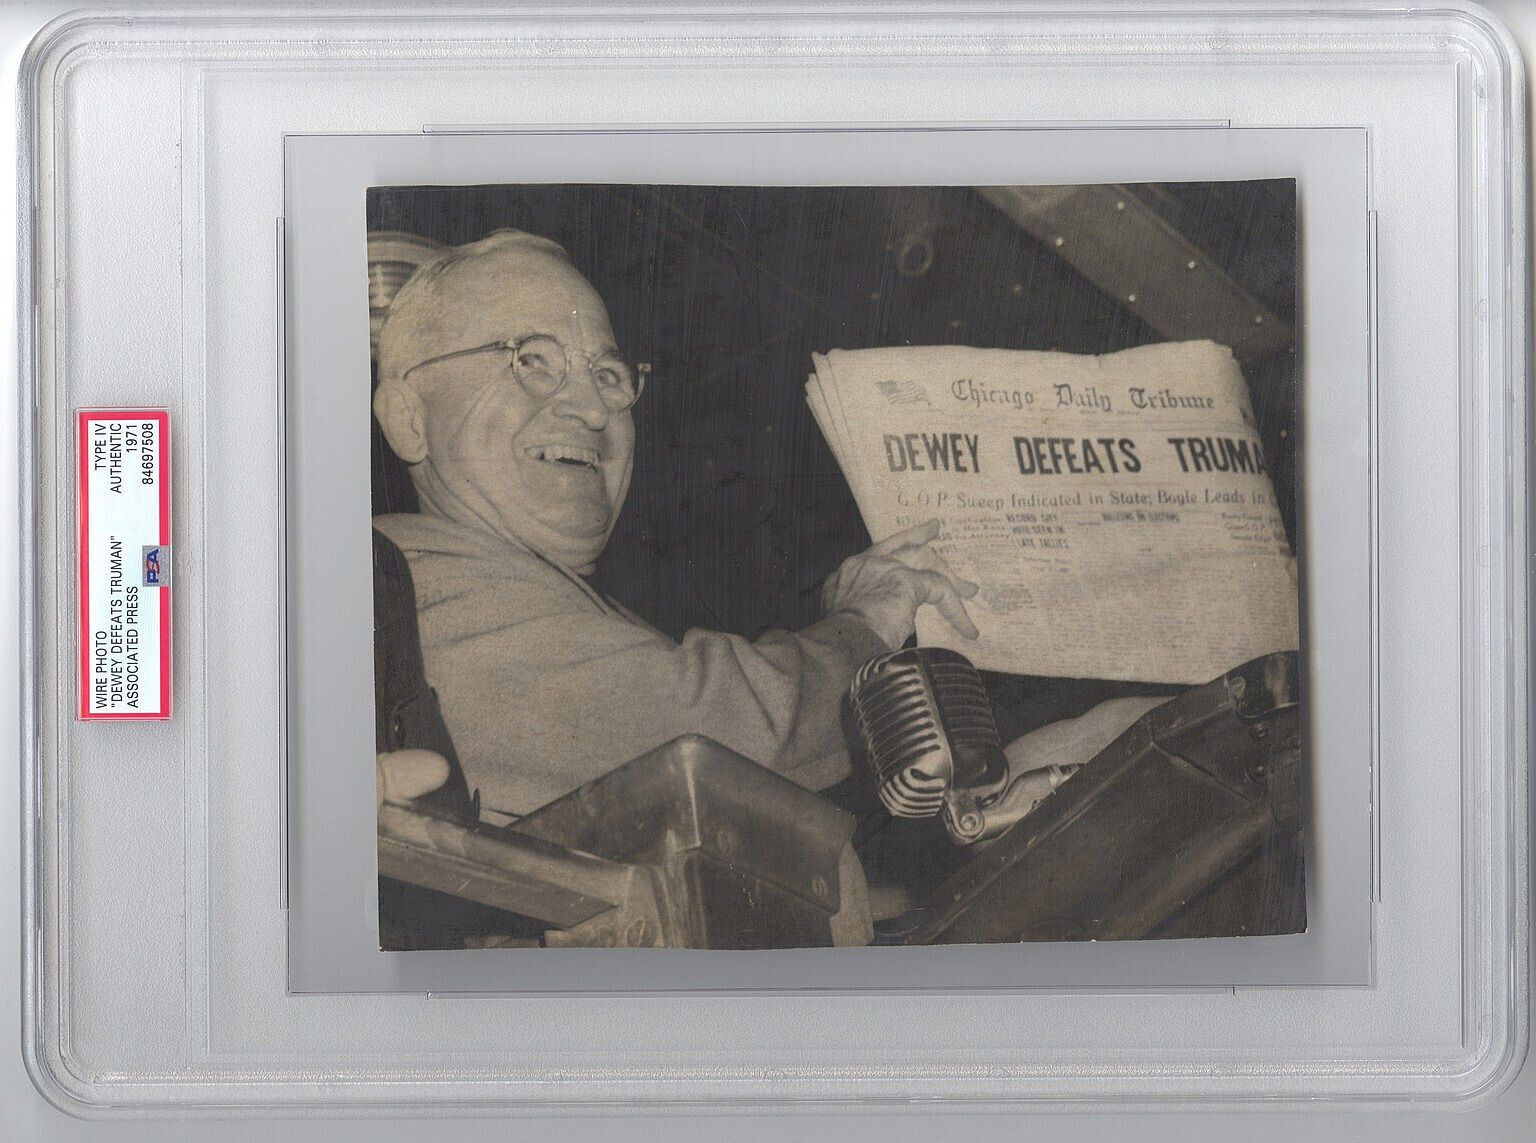 1948 Dewey Defeats Truman Iconic Press Photo Chicago Dailey Tribune PSA/DNA IV